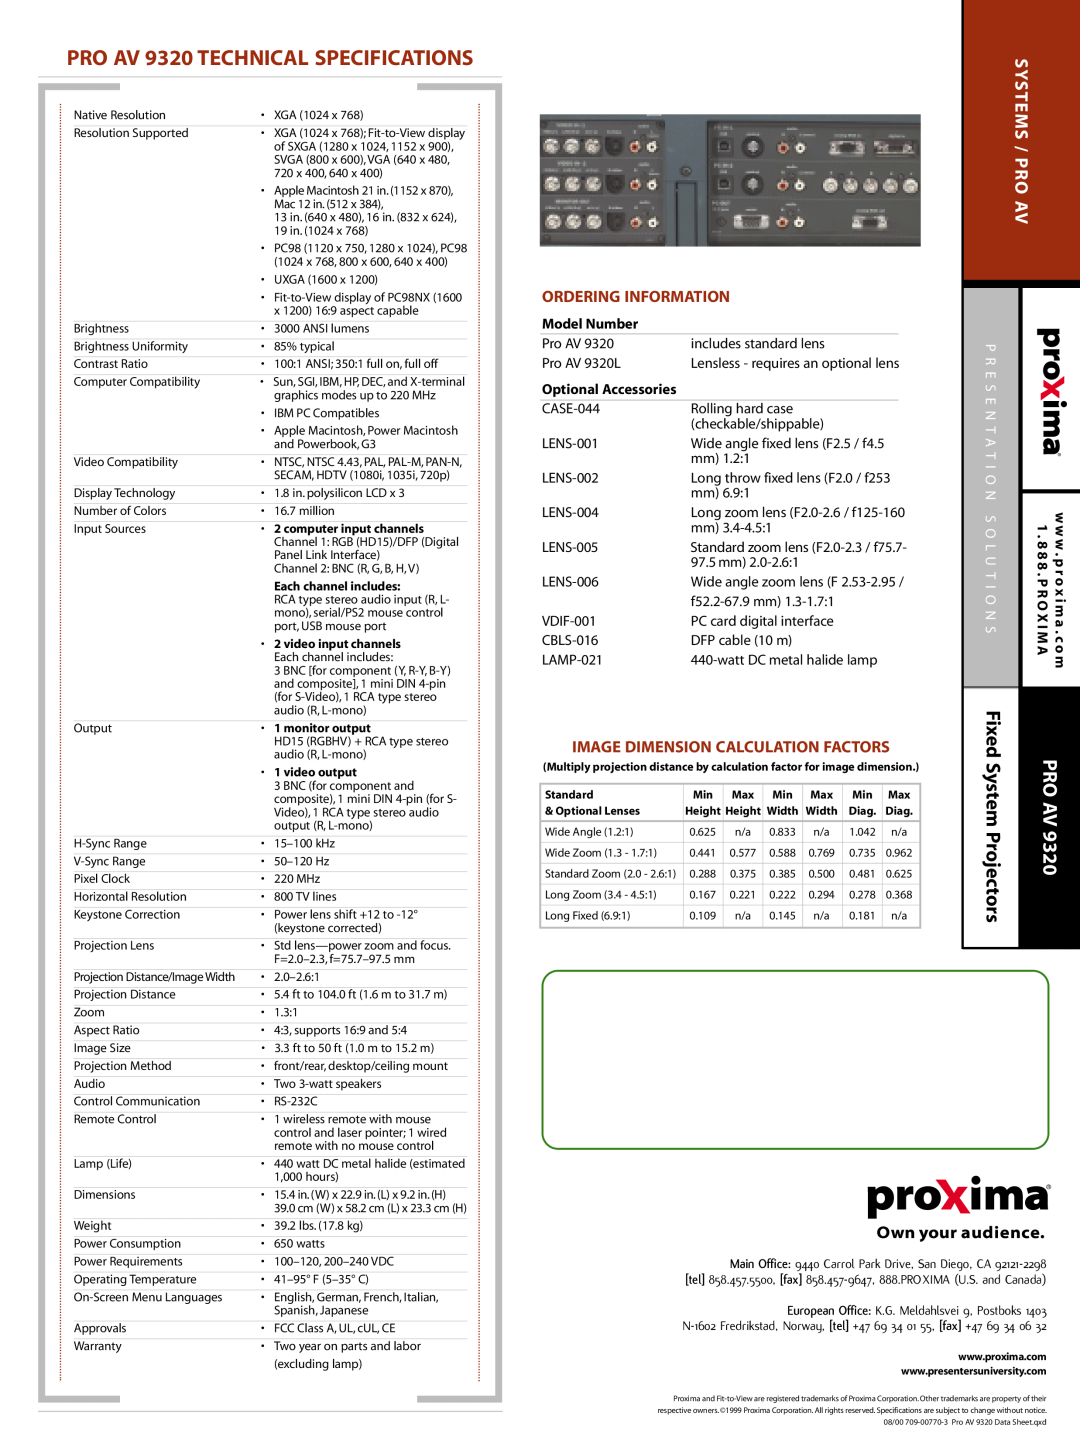 Proxima ASA PRO AV 9320 TECHNICAL SPECIFICATIONS, Ordering Information, Image Dimension Calculation Factors, Projectors 